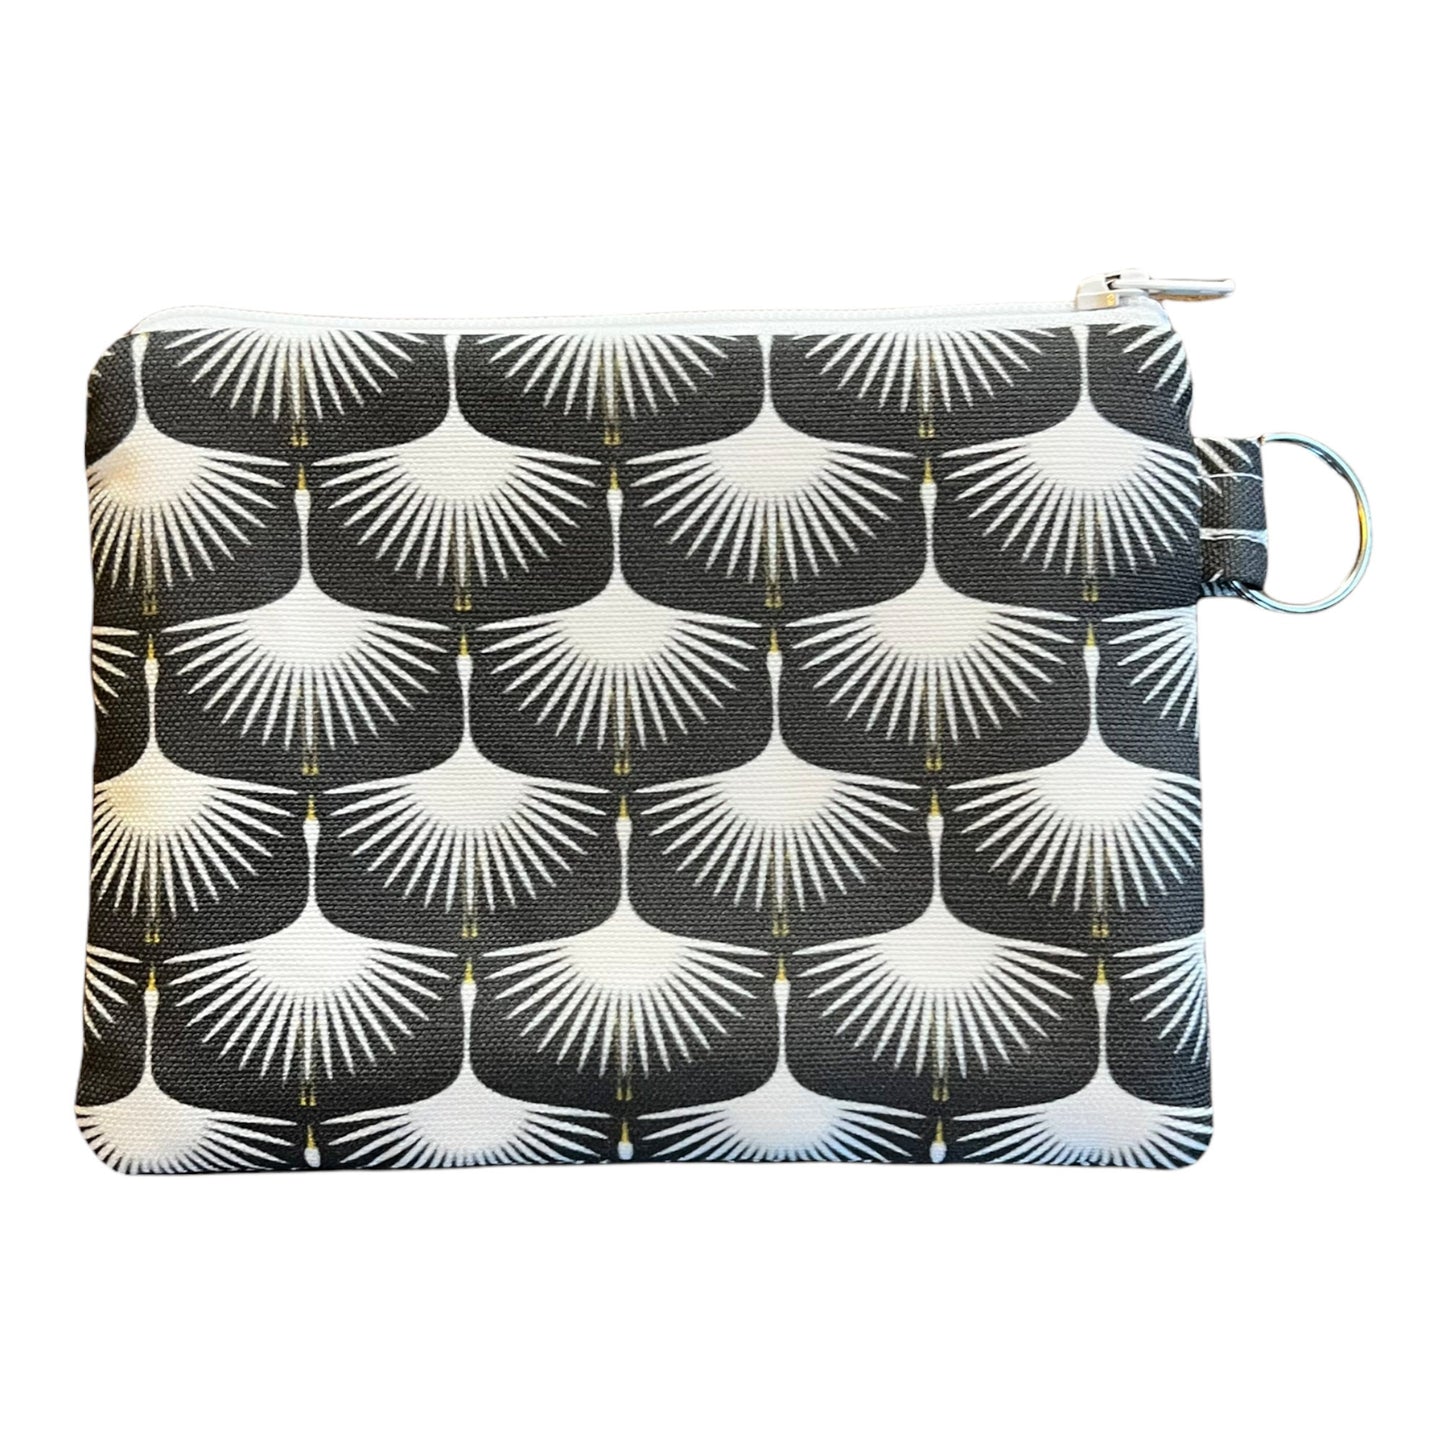 Art deco style swan coin purse, bird print change purse, 6"x4.5" linen & cotton fabric zipper pouch